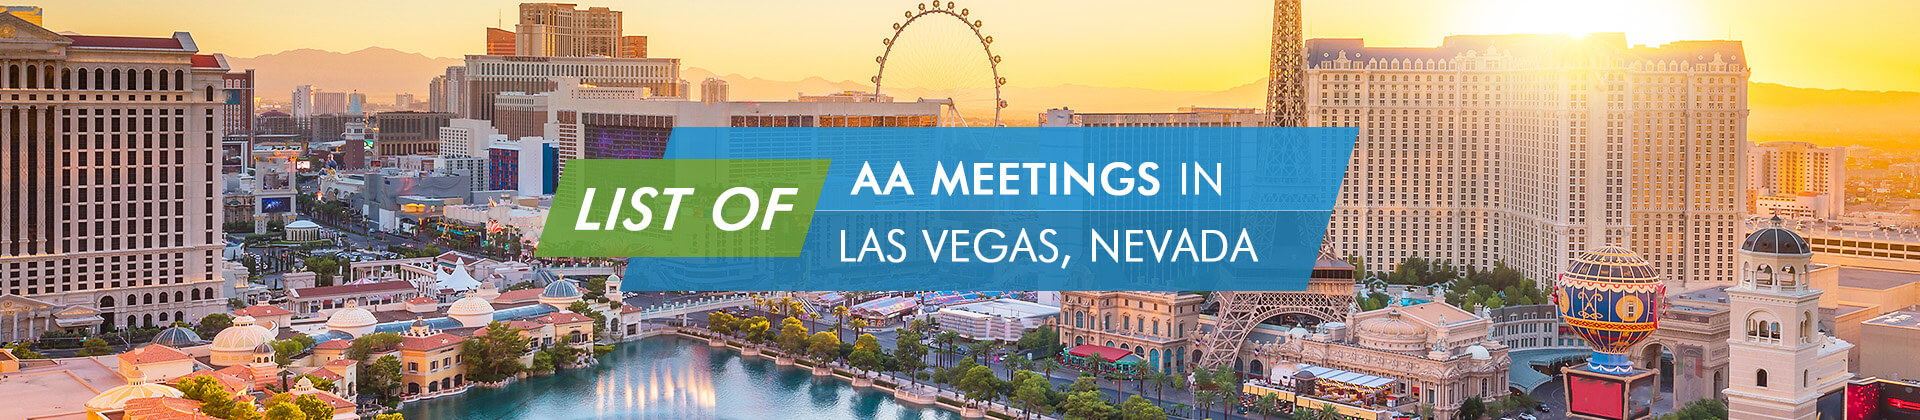 AA Meetings Las Vegas Nevada